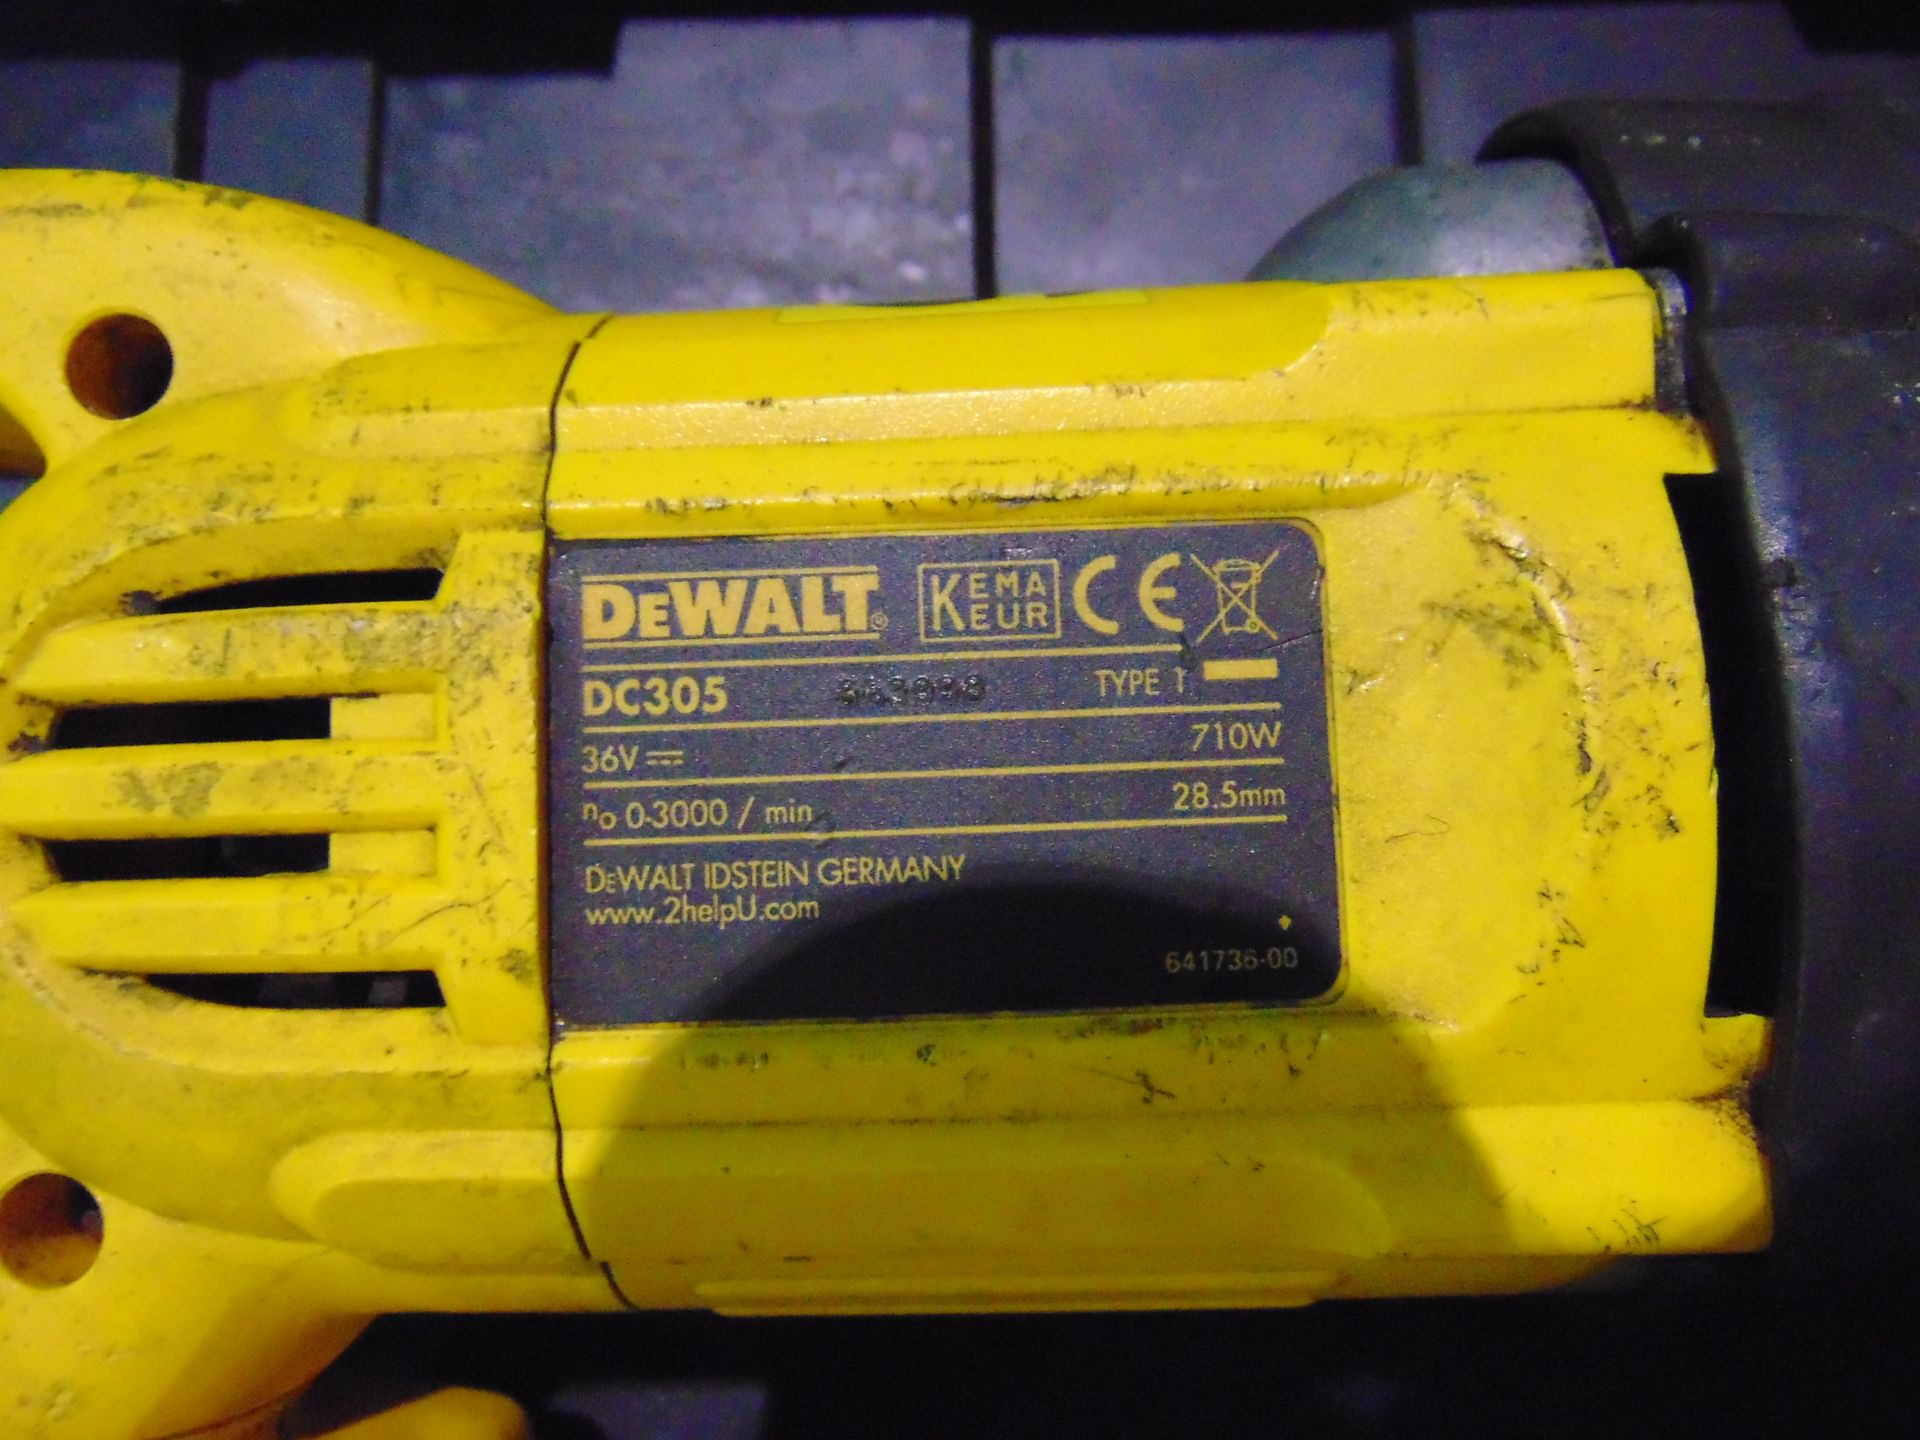 DeWalt DC305 Cordless Reciprocating Saw - Image 3 of 4